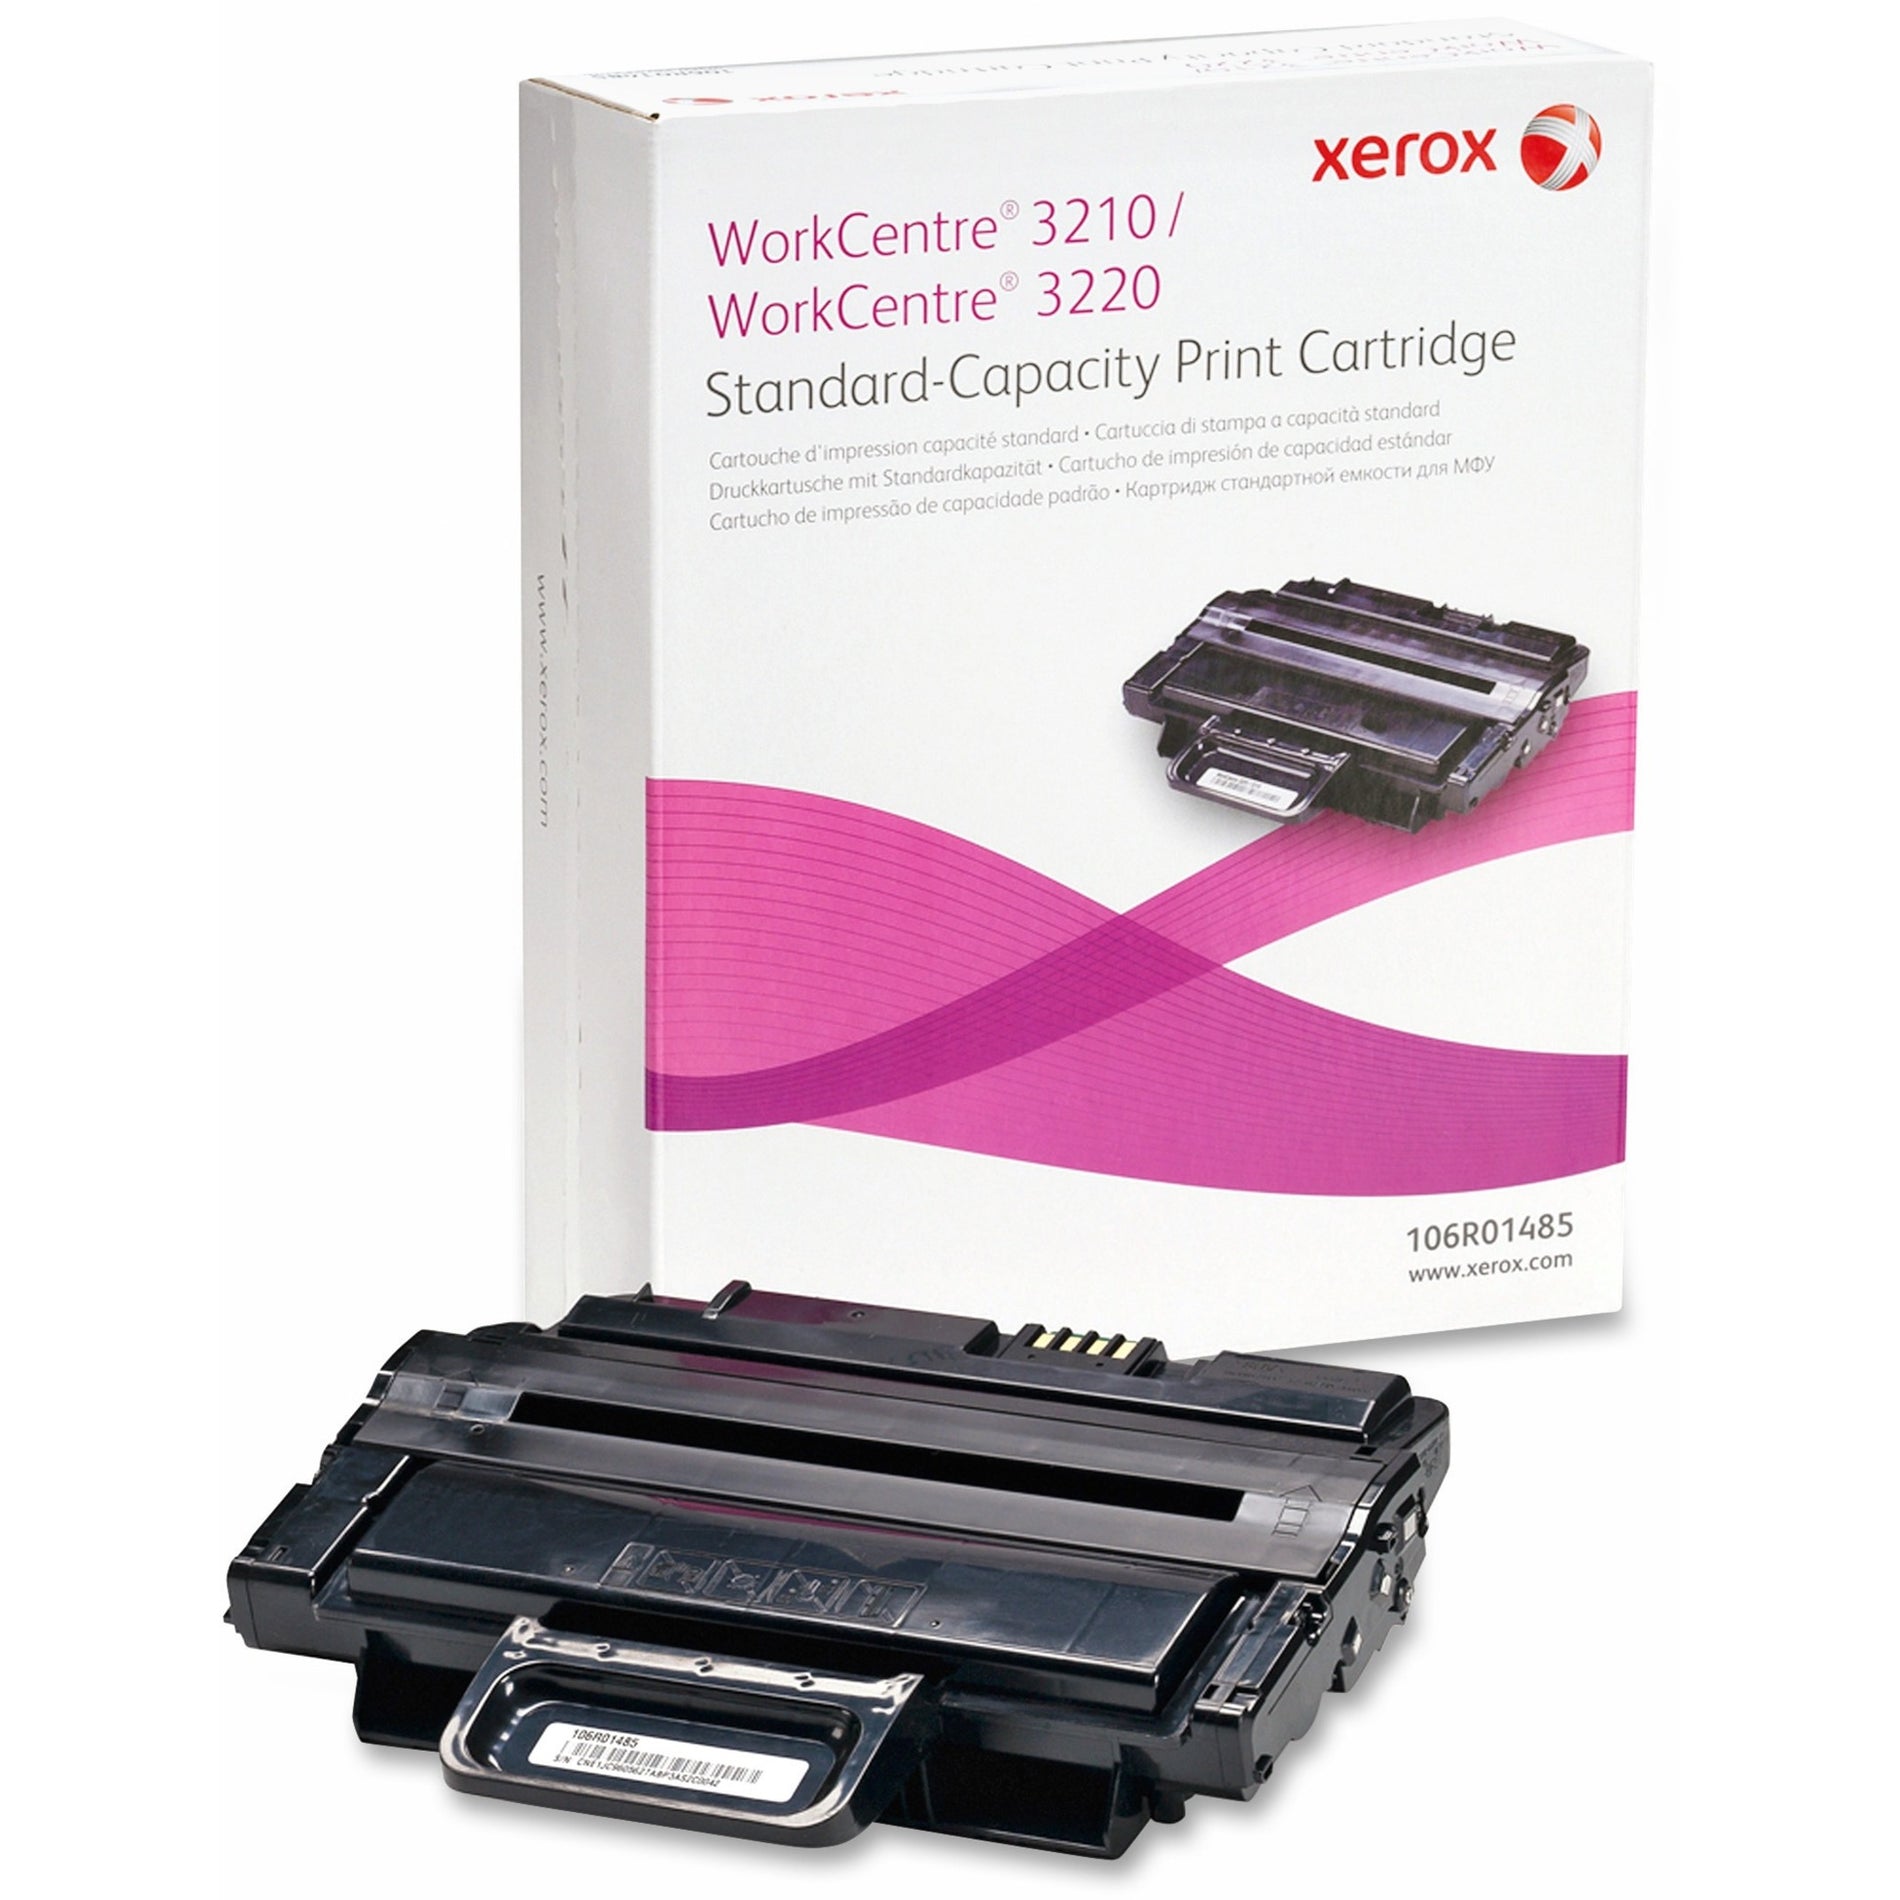 Xerox Print Cartridge, 2000 Page Yield, Black (106R01485) [Discontinued]